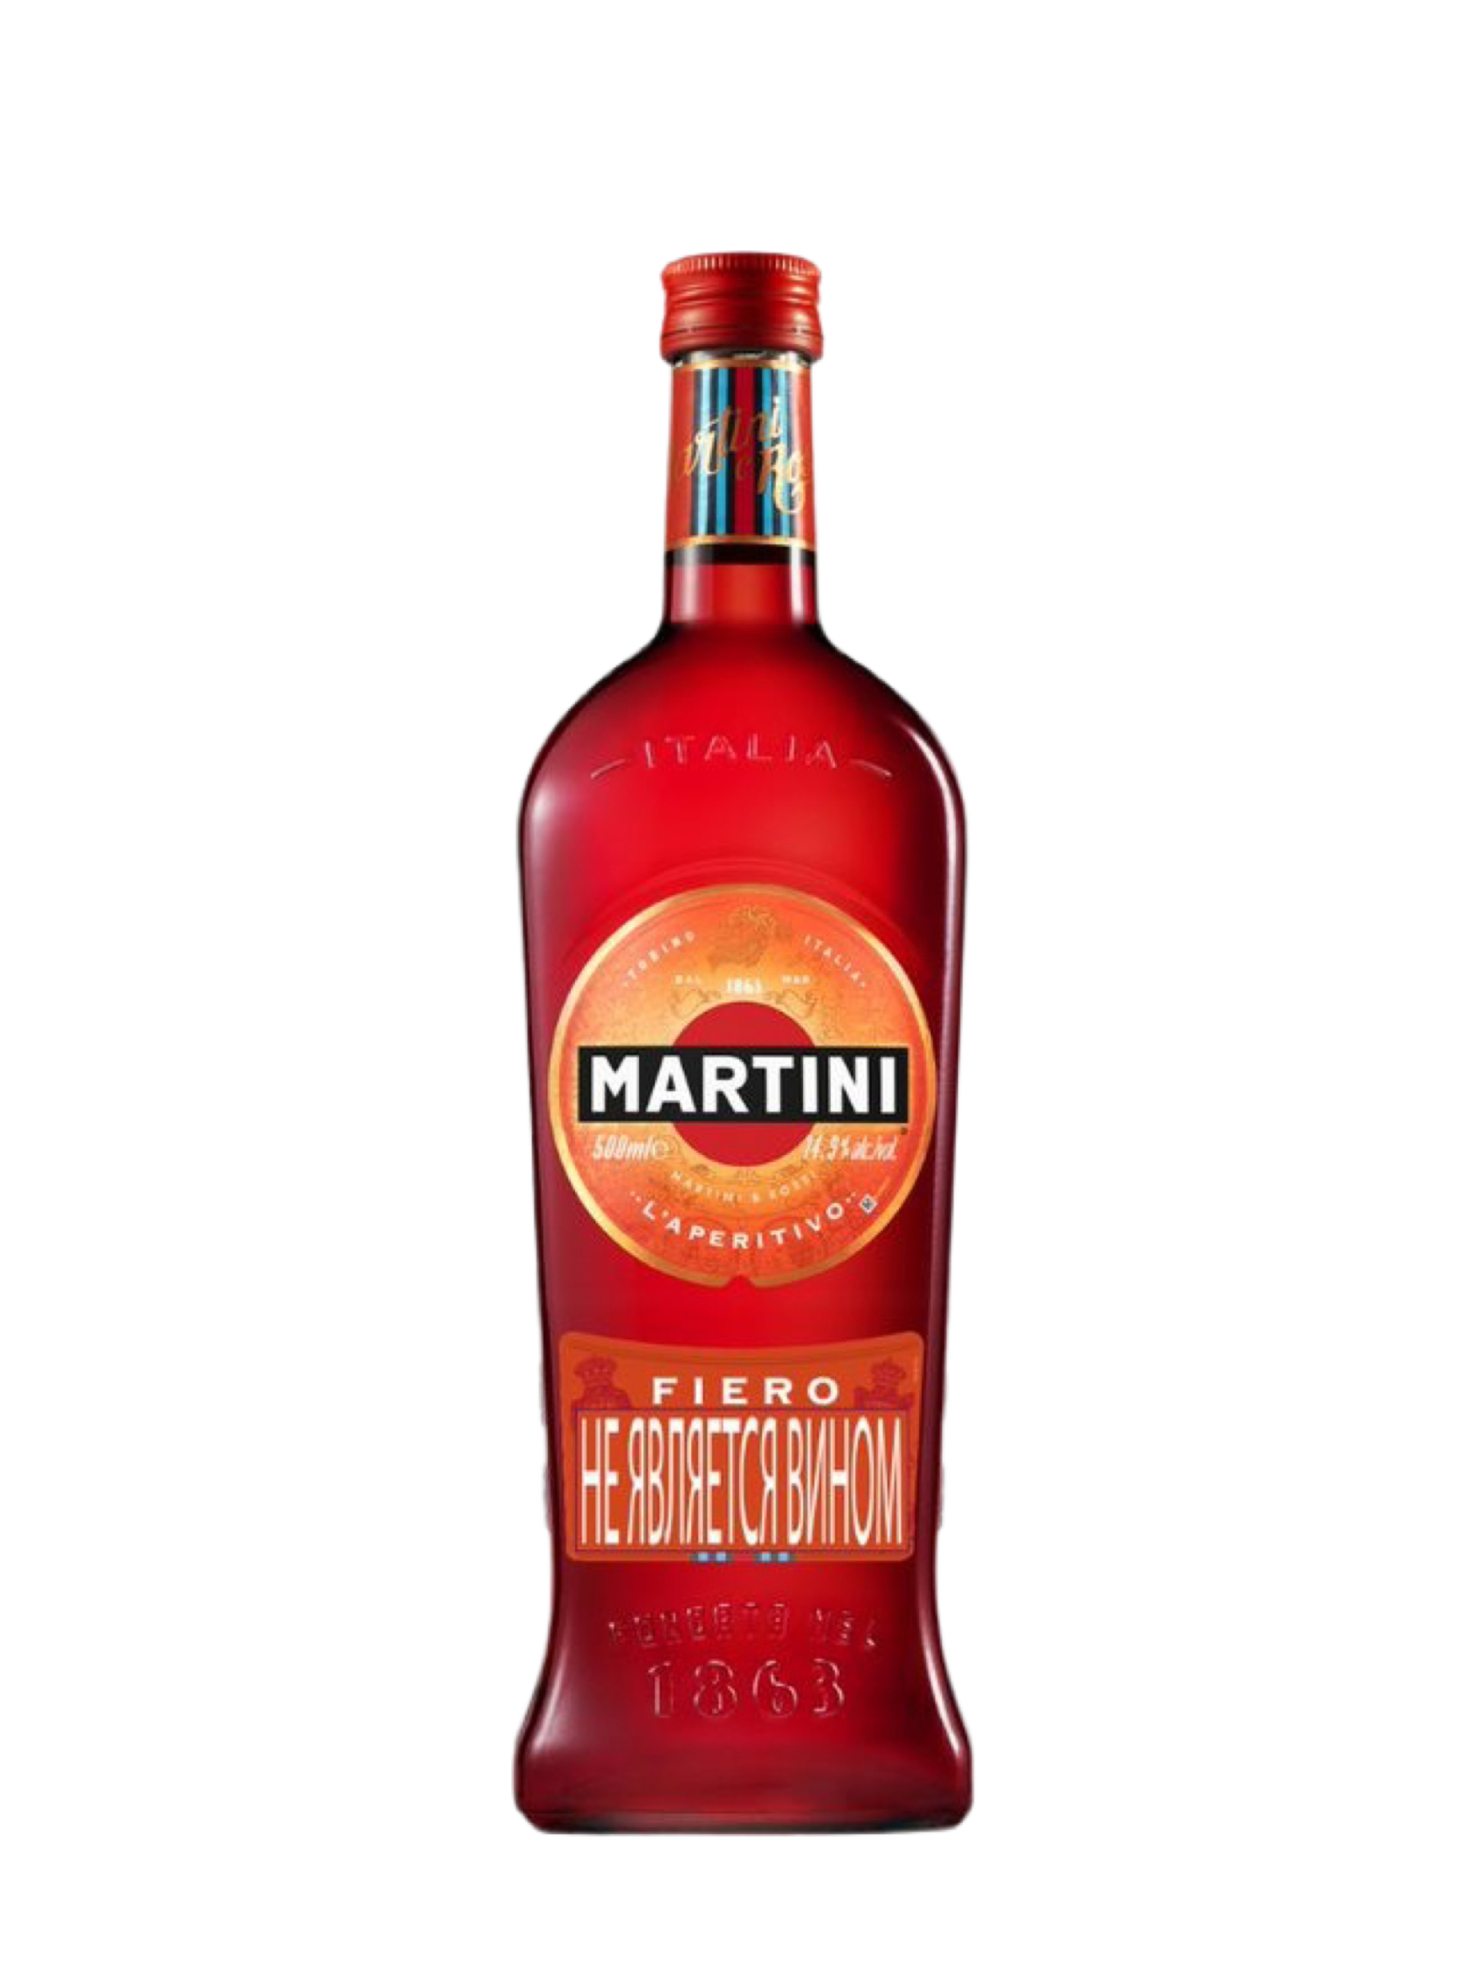 Напиток Мартини Фиеро ароматиз. виноградосодержащий 14,9% 1л (Италия)